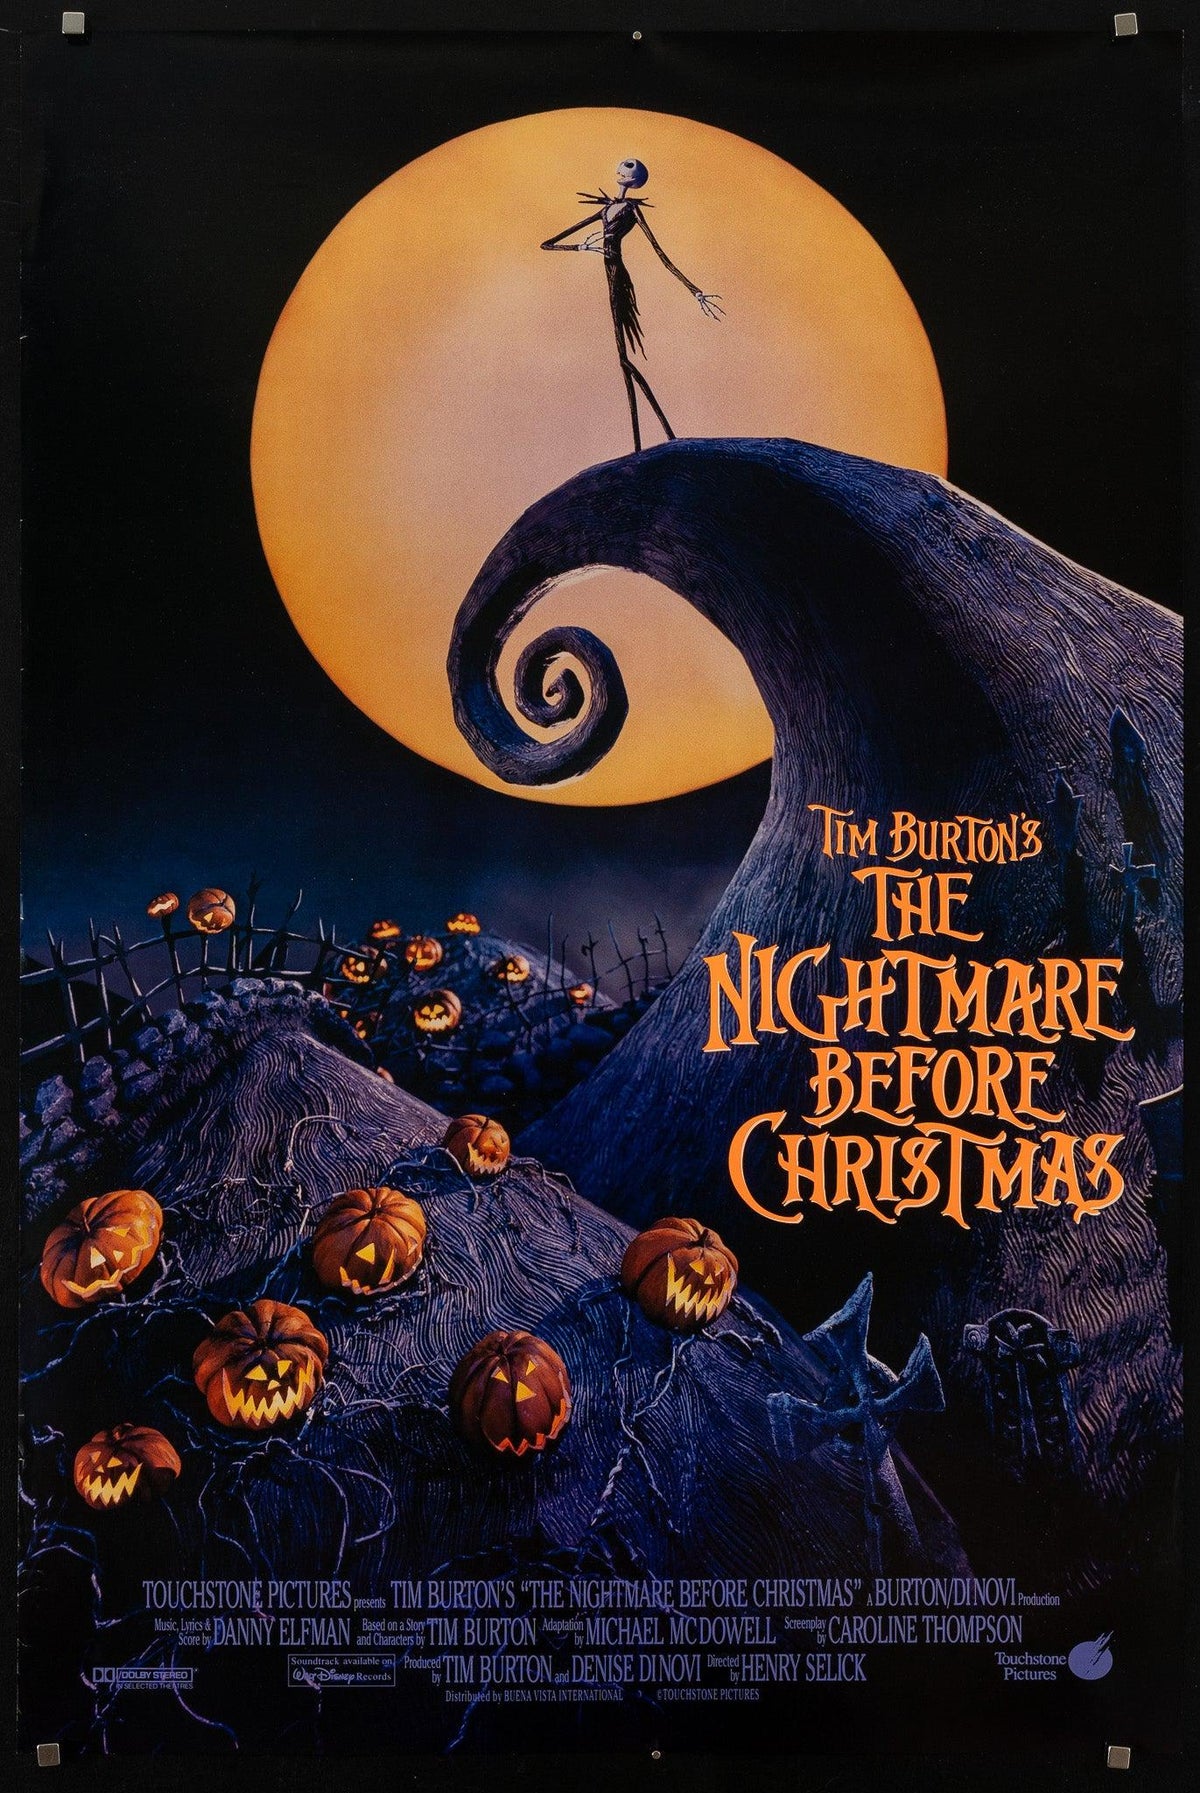 The Nightmare Before Christmas 1 Sheet (27x41) Original Vintage Movie Poster